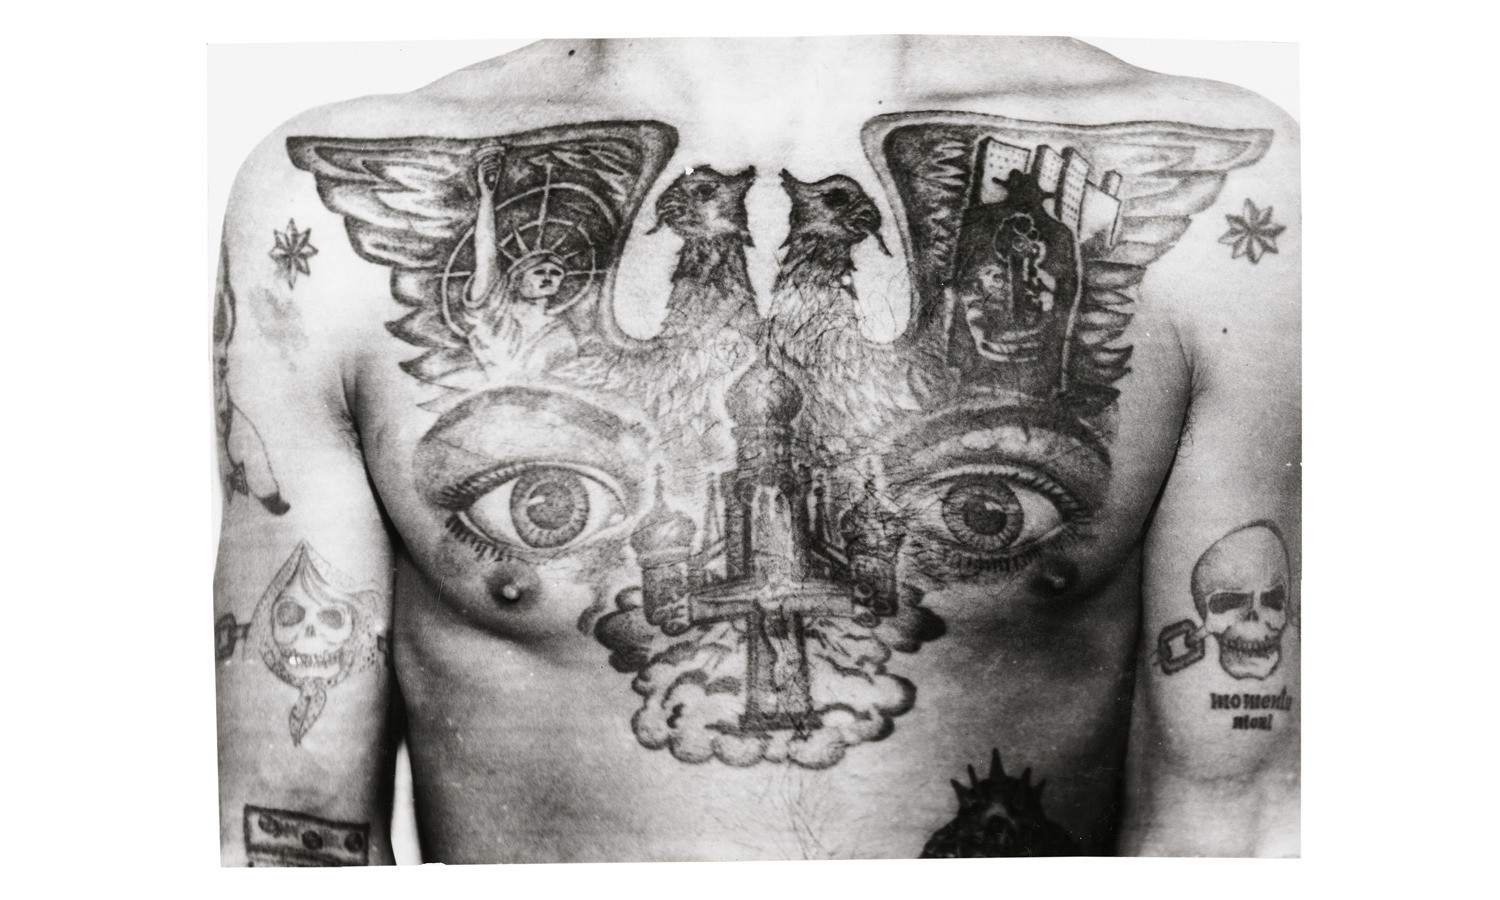 Print No. 22 | Sergei Vasiliev | Photographs | Russian Criminal Tattoo  Archive | FUEL